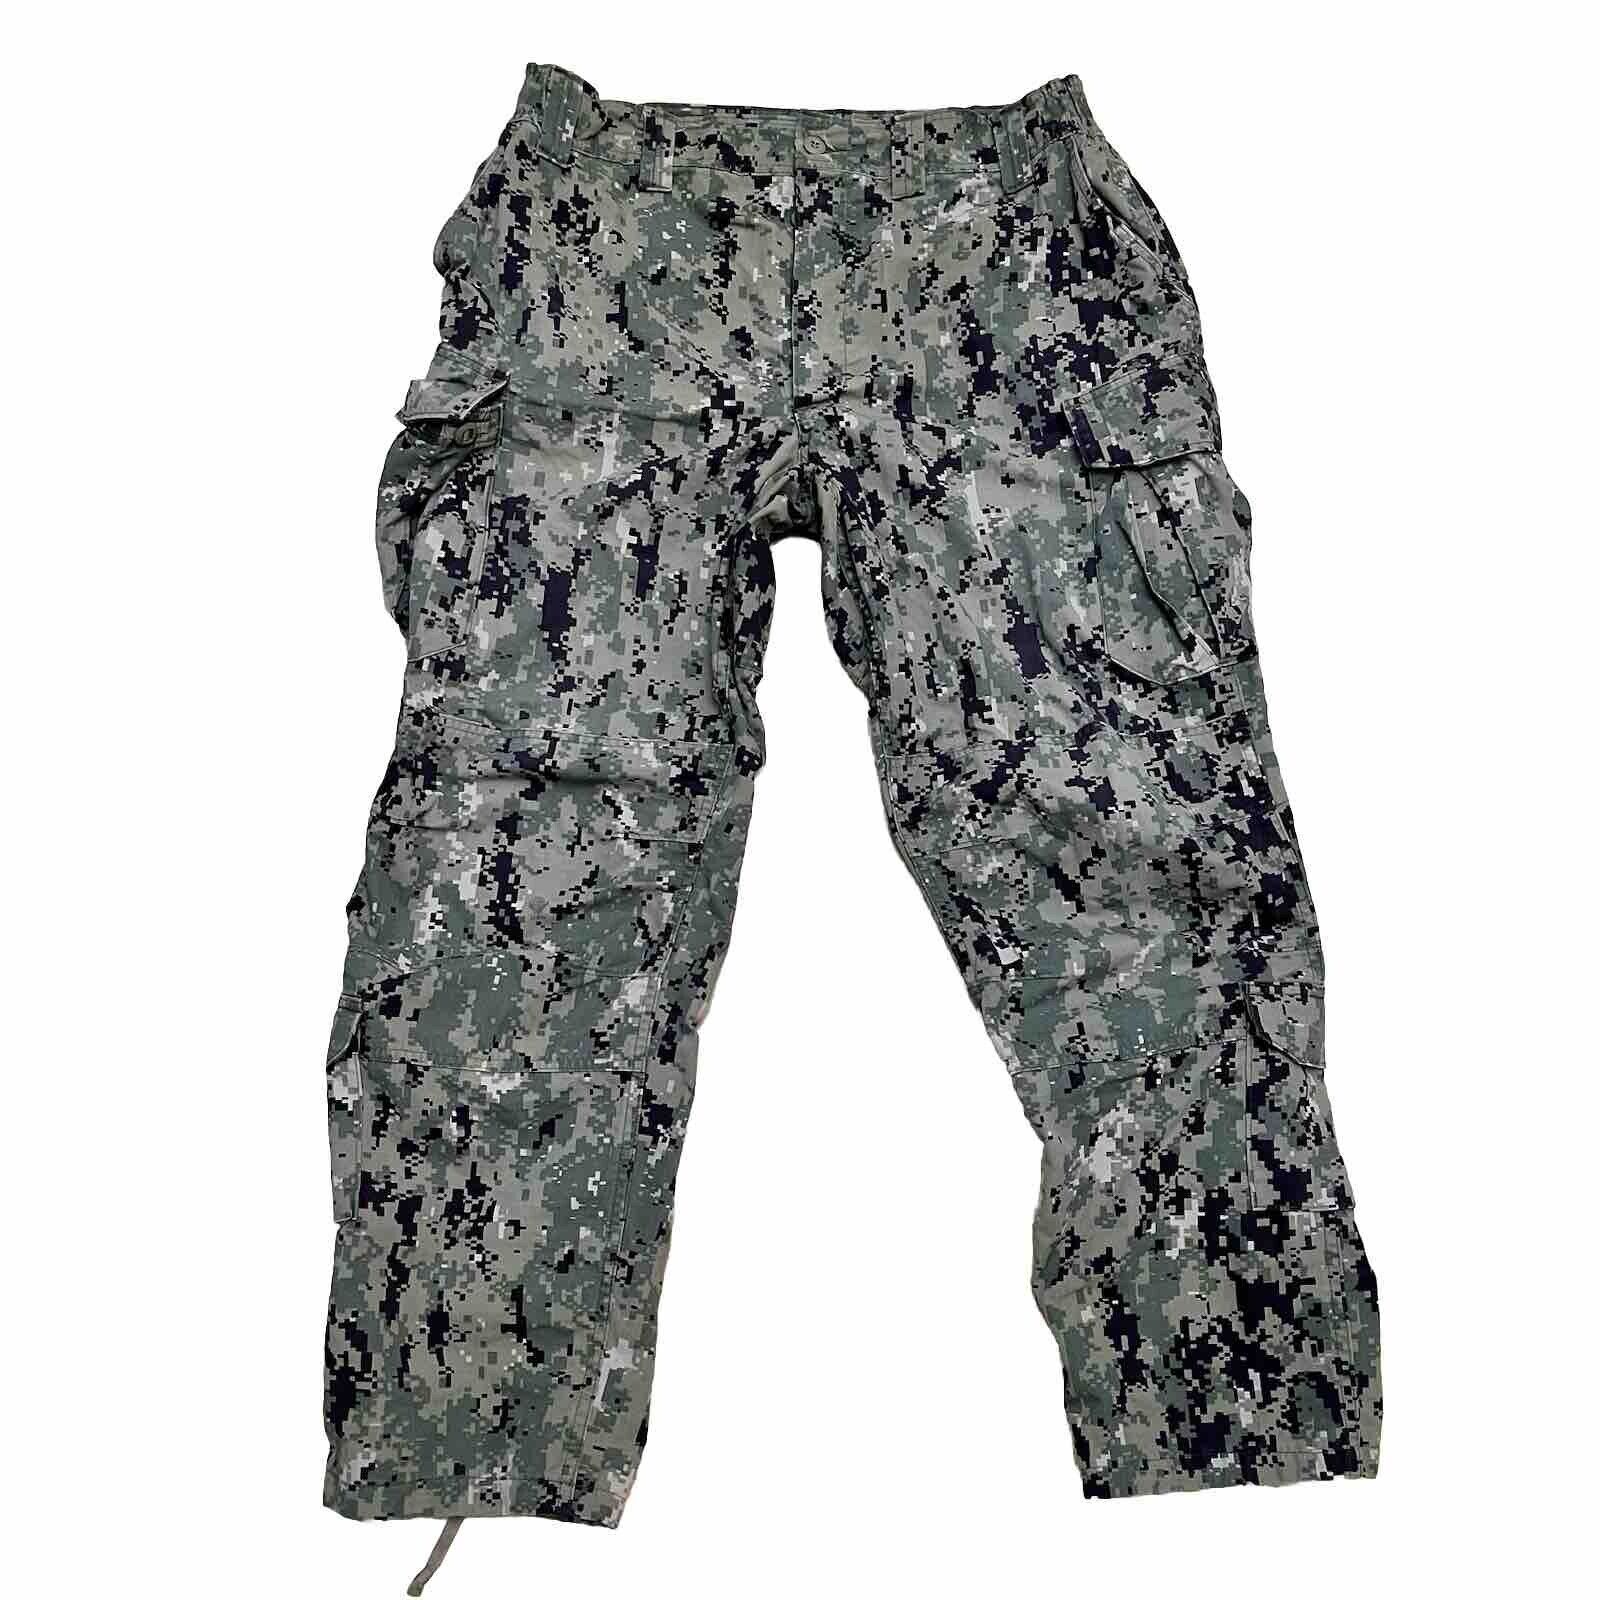 US Navy Working Uniform Type III Trouser Pants 8405-01-574-7747 XL Regular Mint